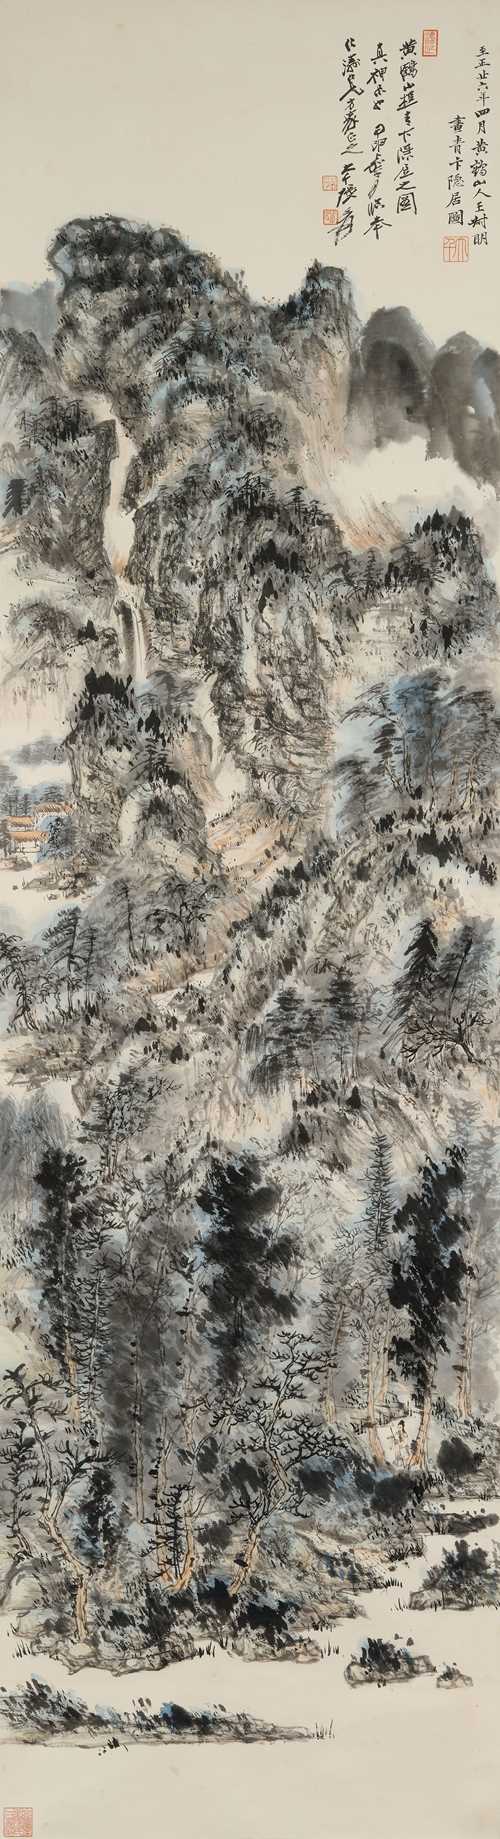 A LANDSCAPE PAINTING BY ZHANG DAQIAN (1899–1983).